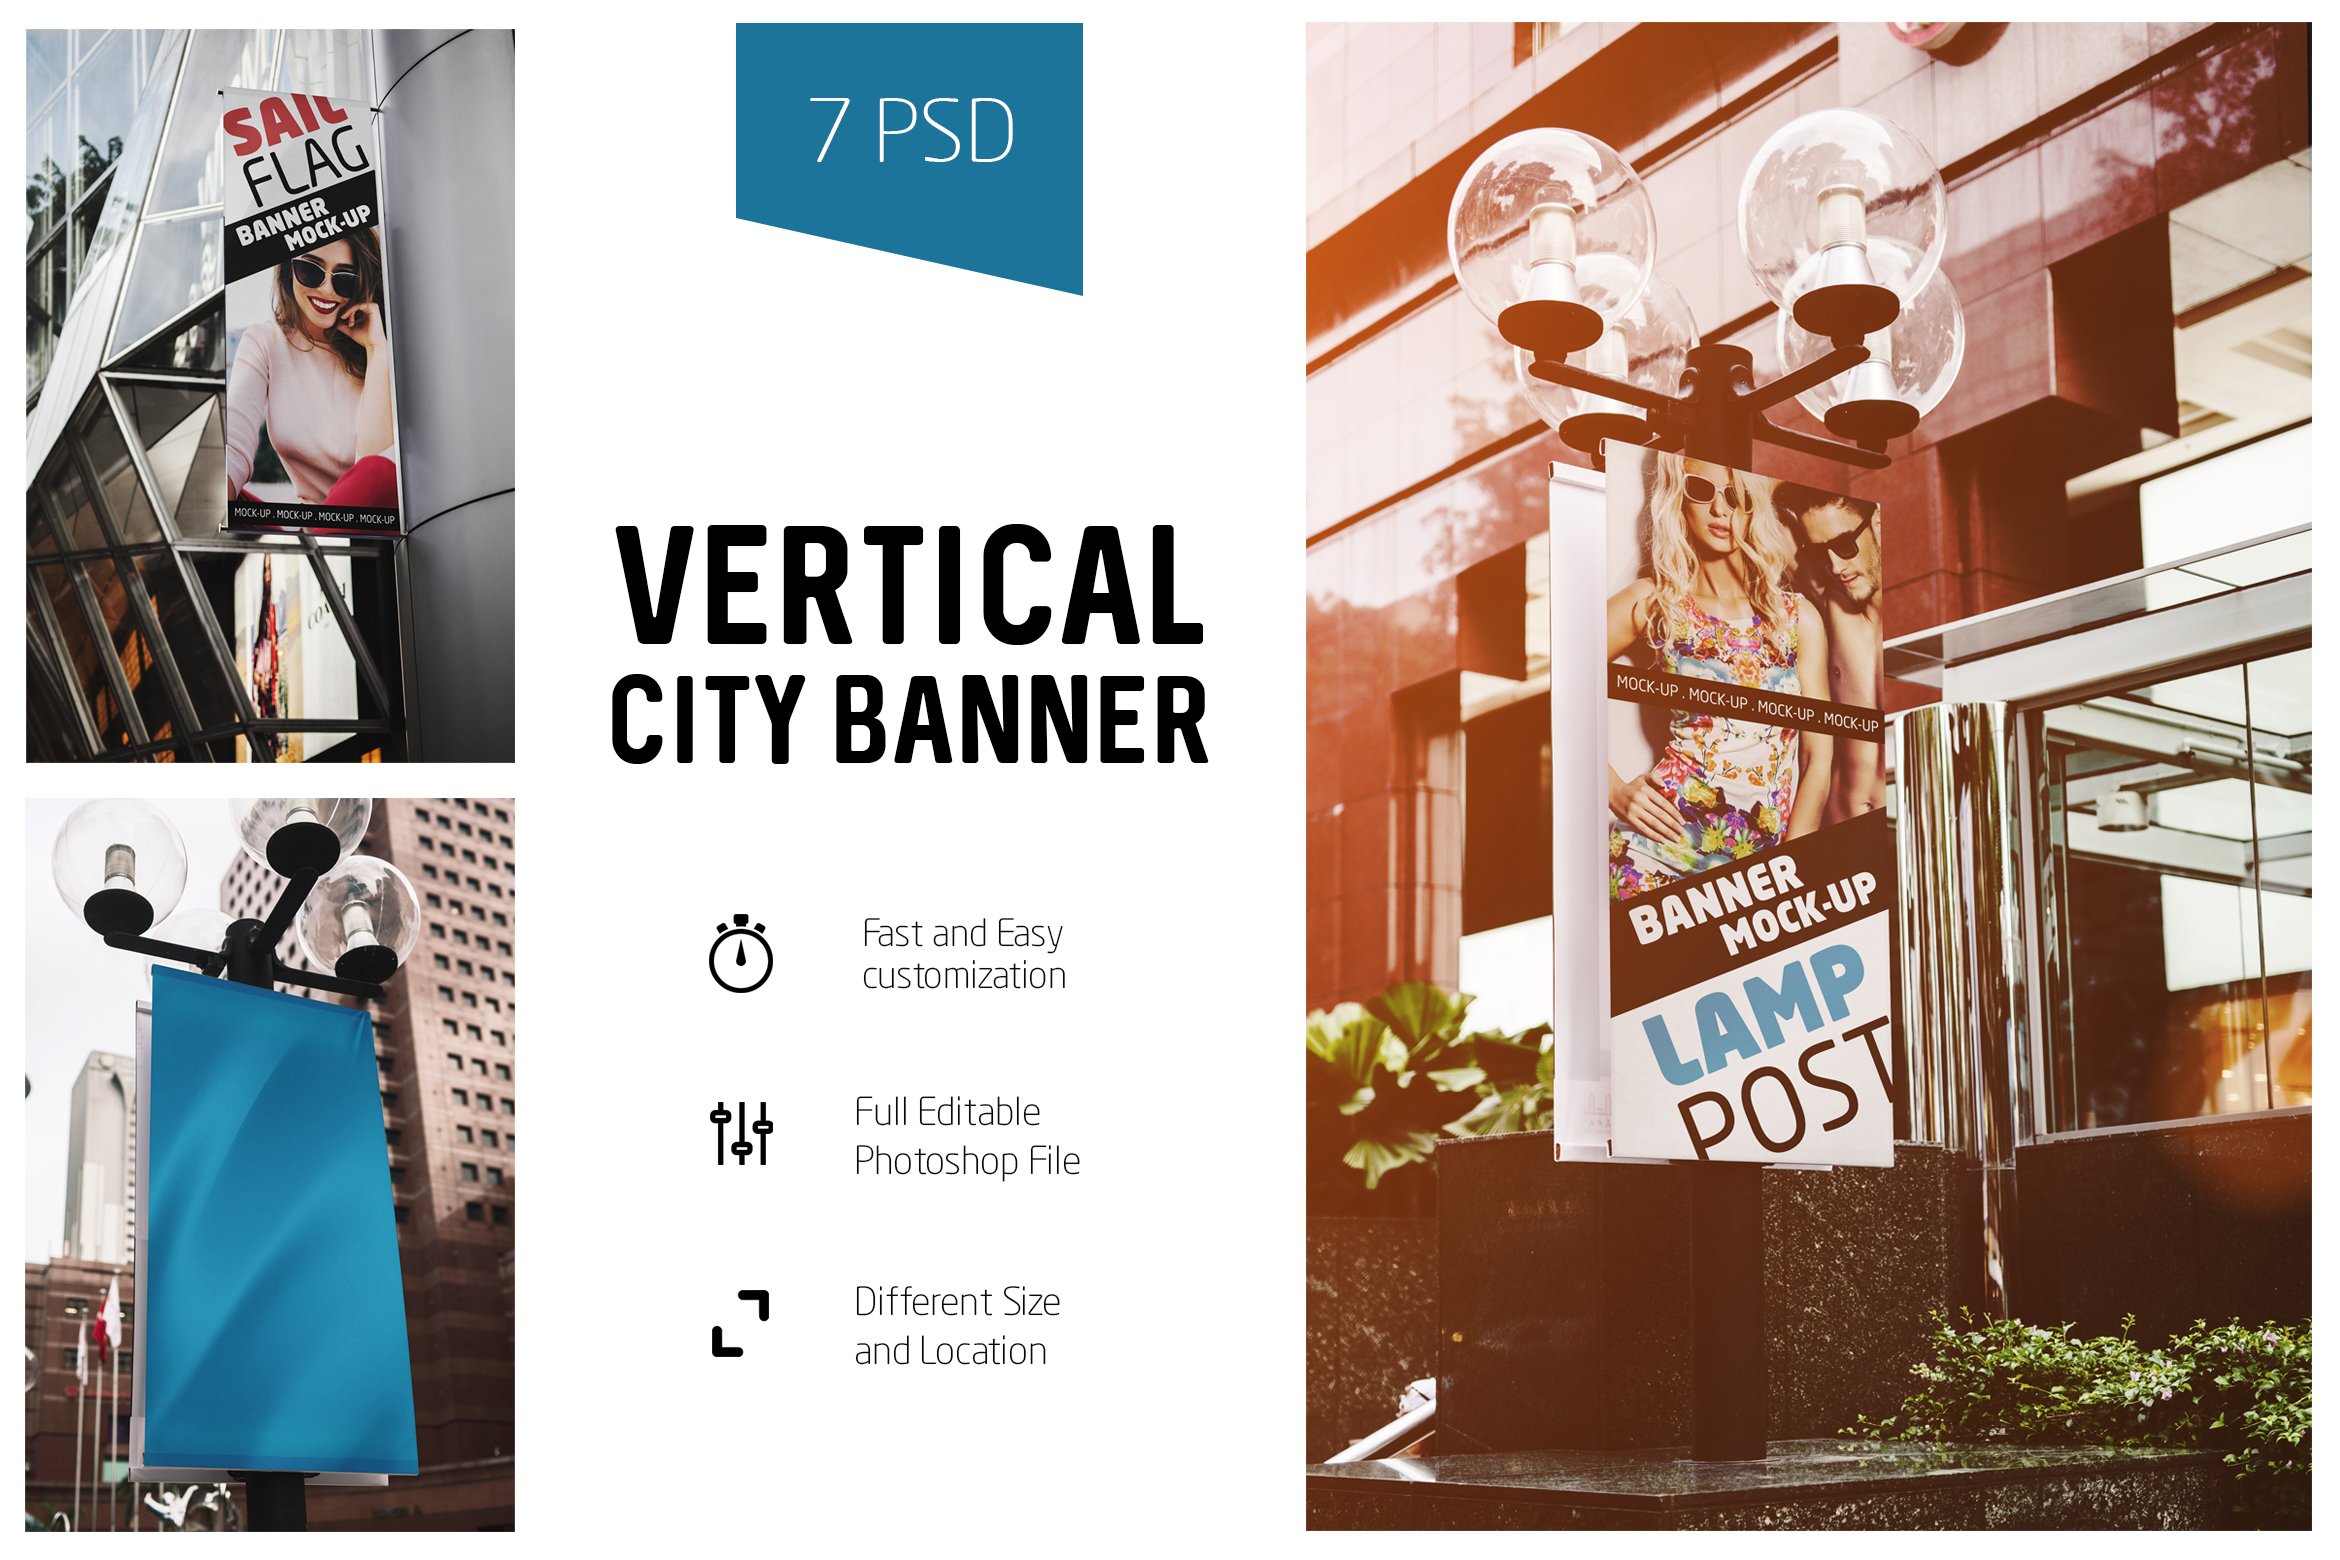 Vertical City Banner Mock-Up cover image.